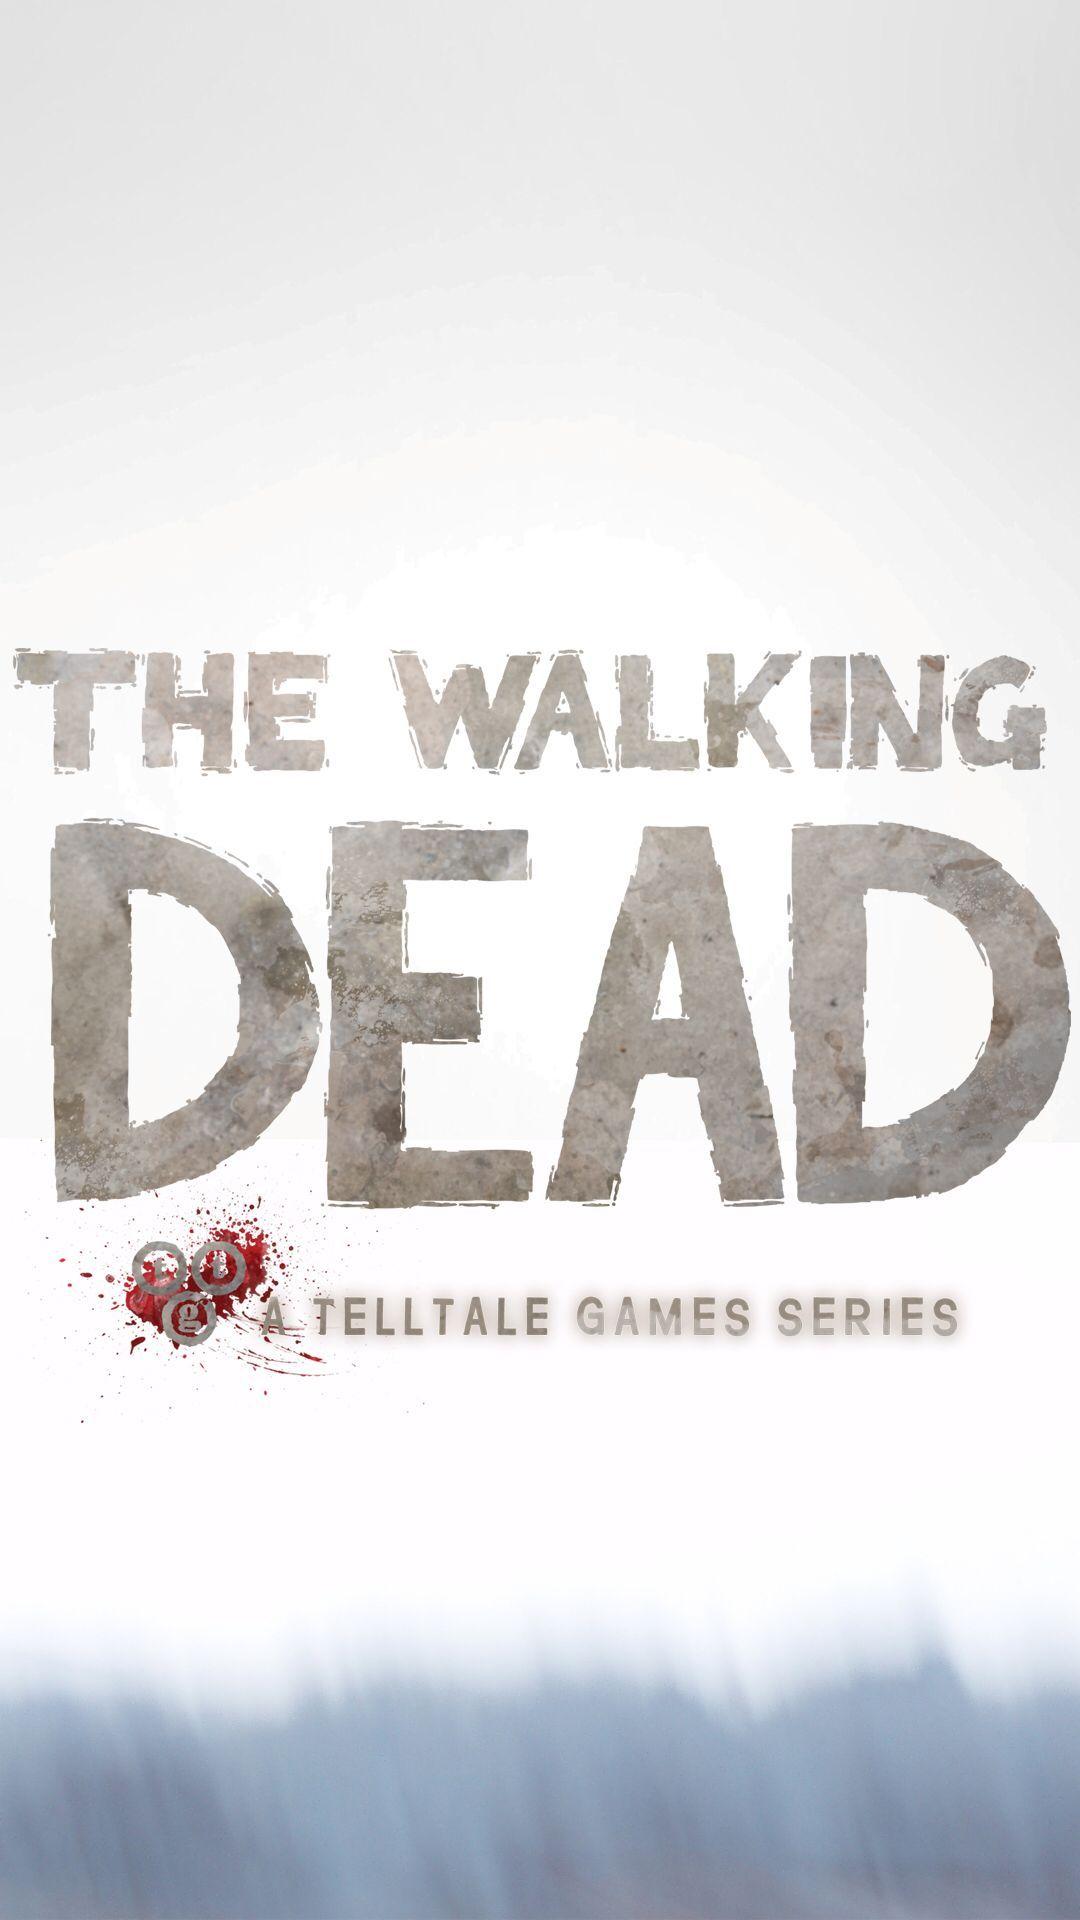 The walking dead game wallpaper iPhone 6 plus. Walking Dead -The